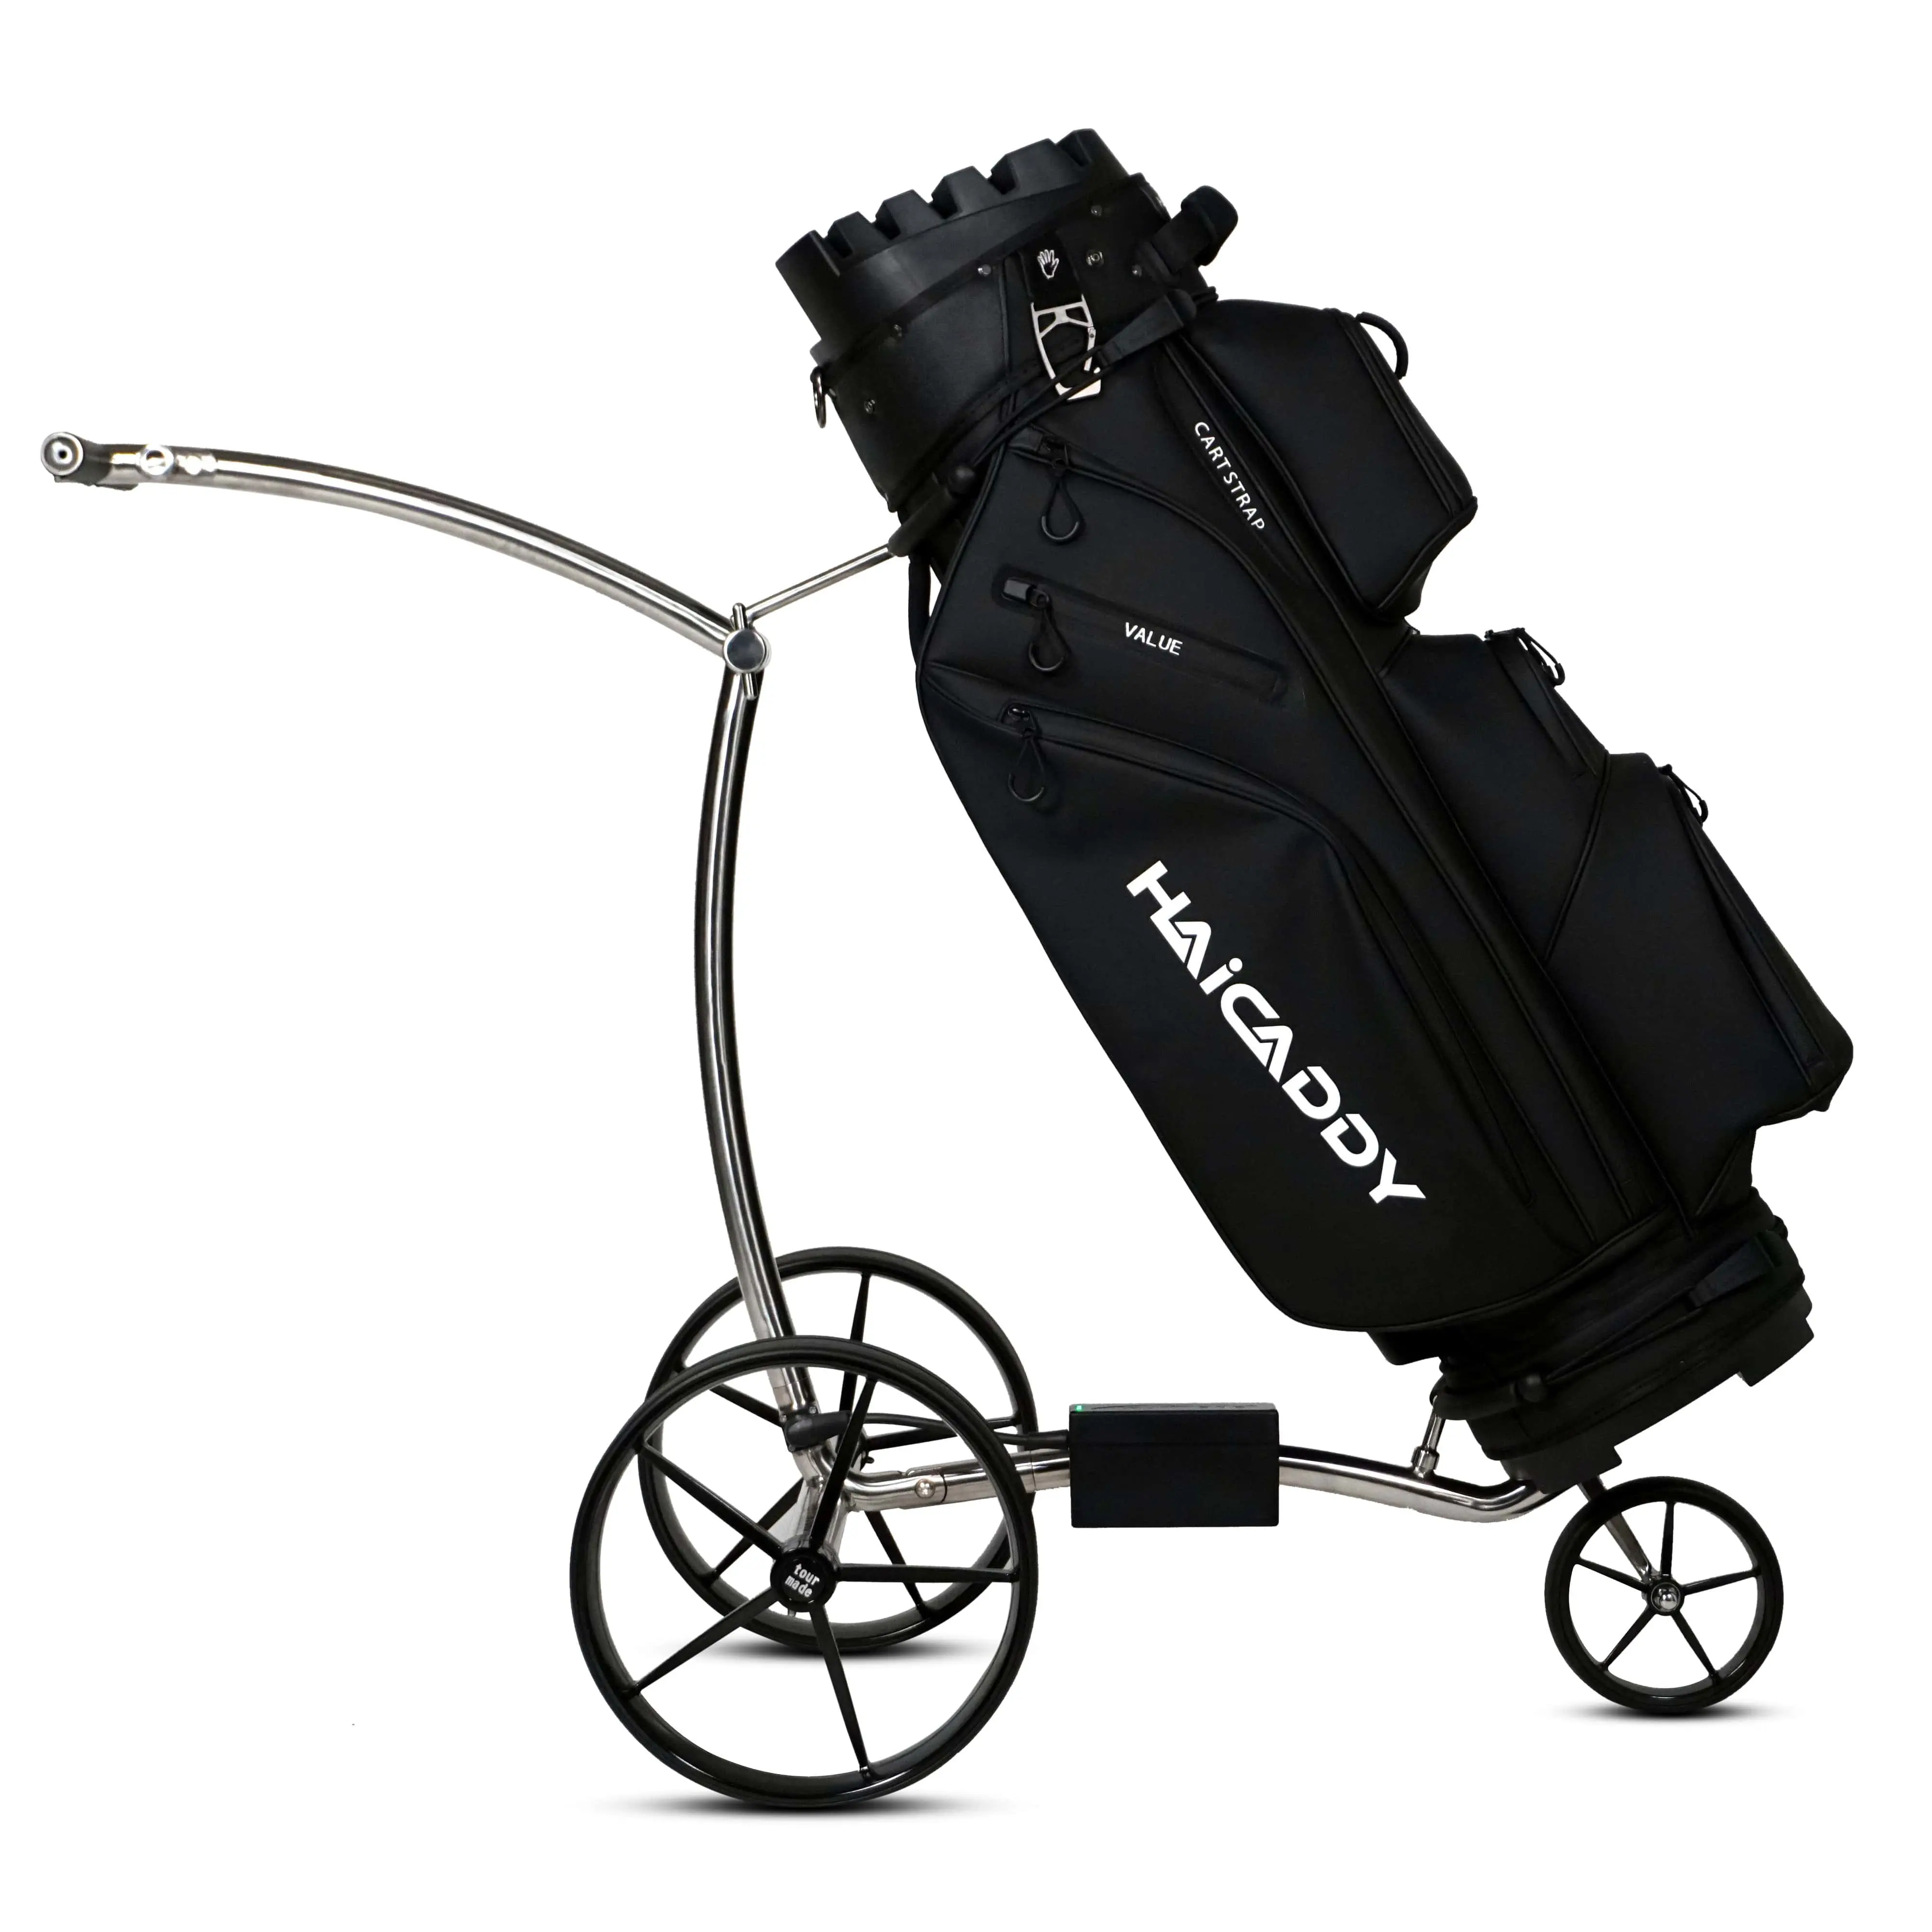 Tour Made Haicaddy® HC9S electric golf trolley